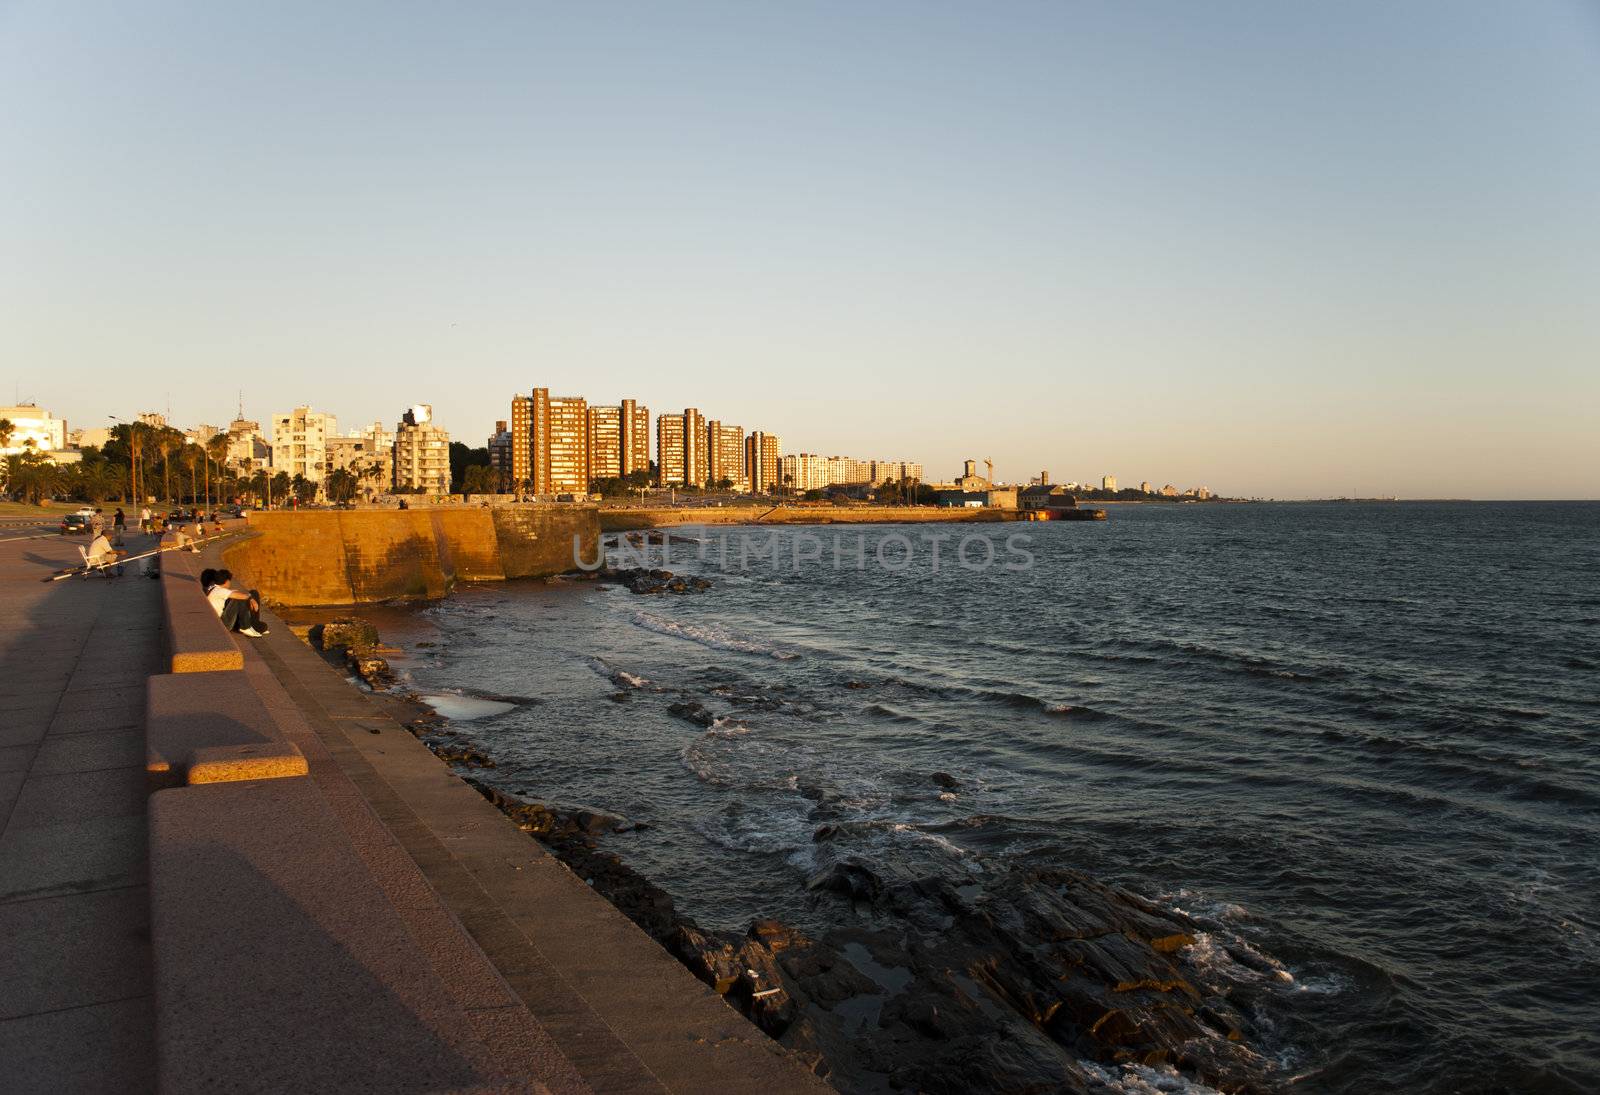 City of Montevideo, Uruguay